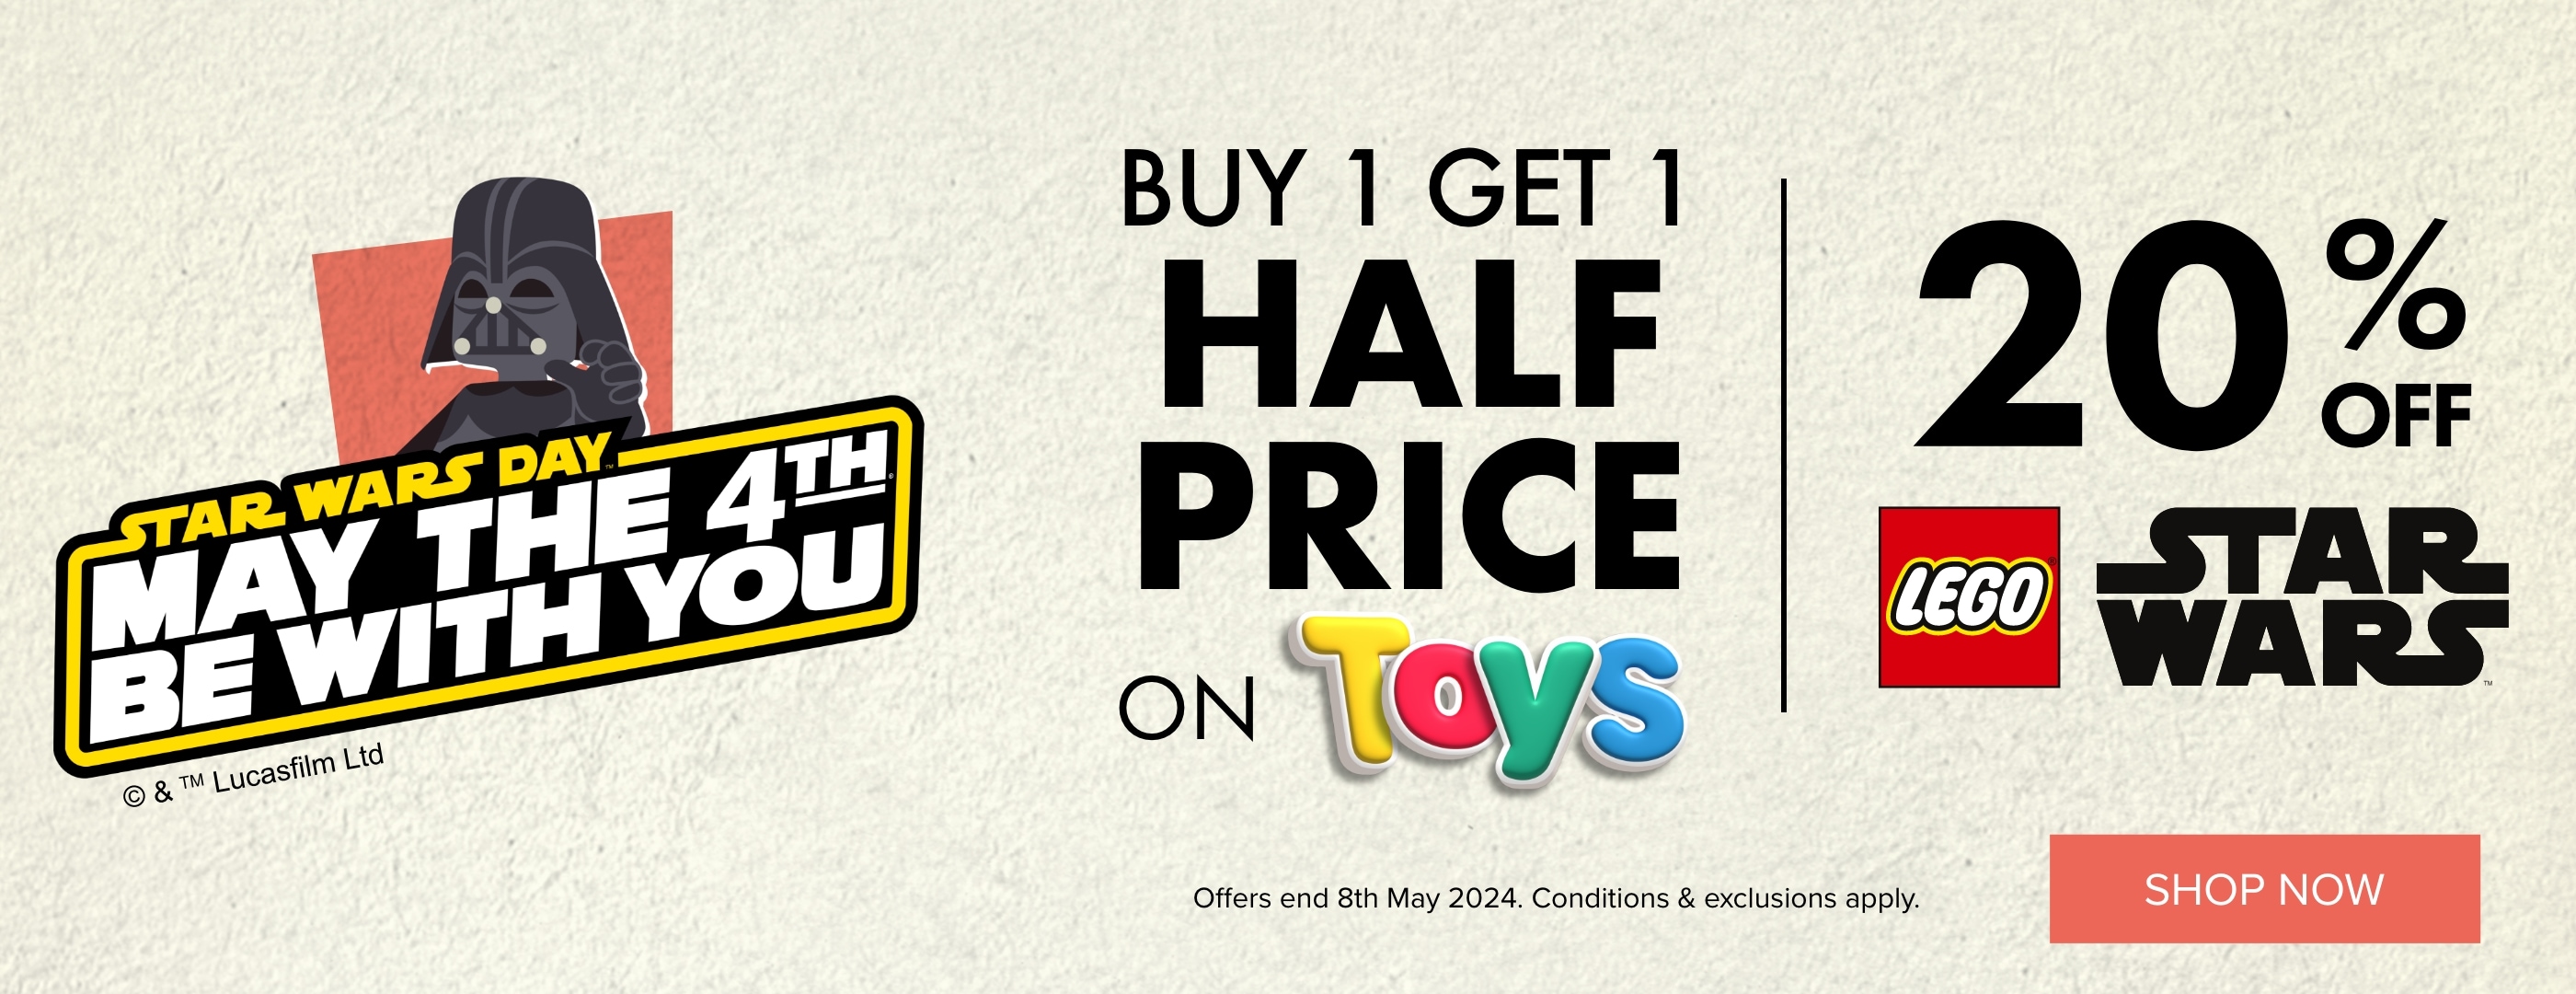 BUY 1 GET 1 HALF PRICE on Toys | 20% OFF LEGO Star Wars 